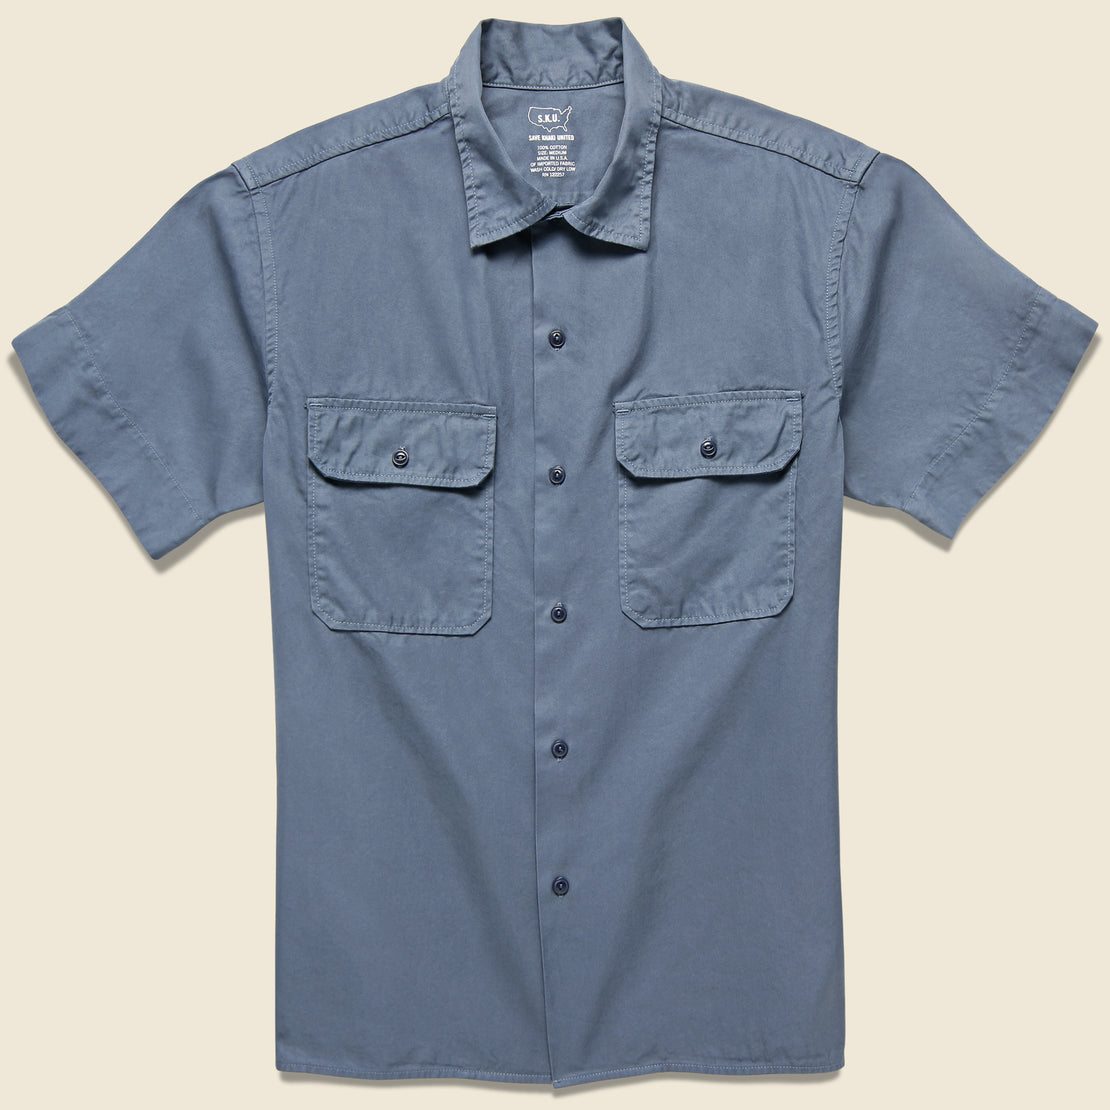 Save Khaki Light Twill Camp Shirt - Blue